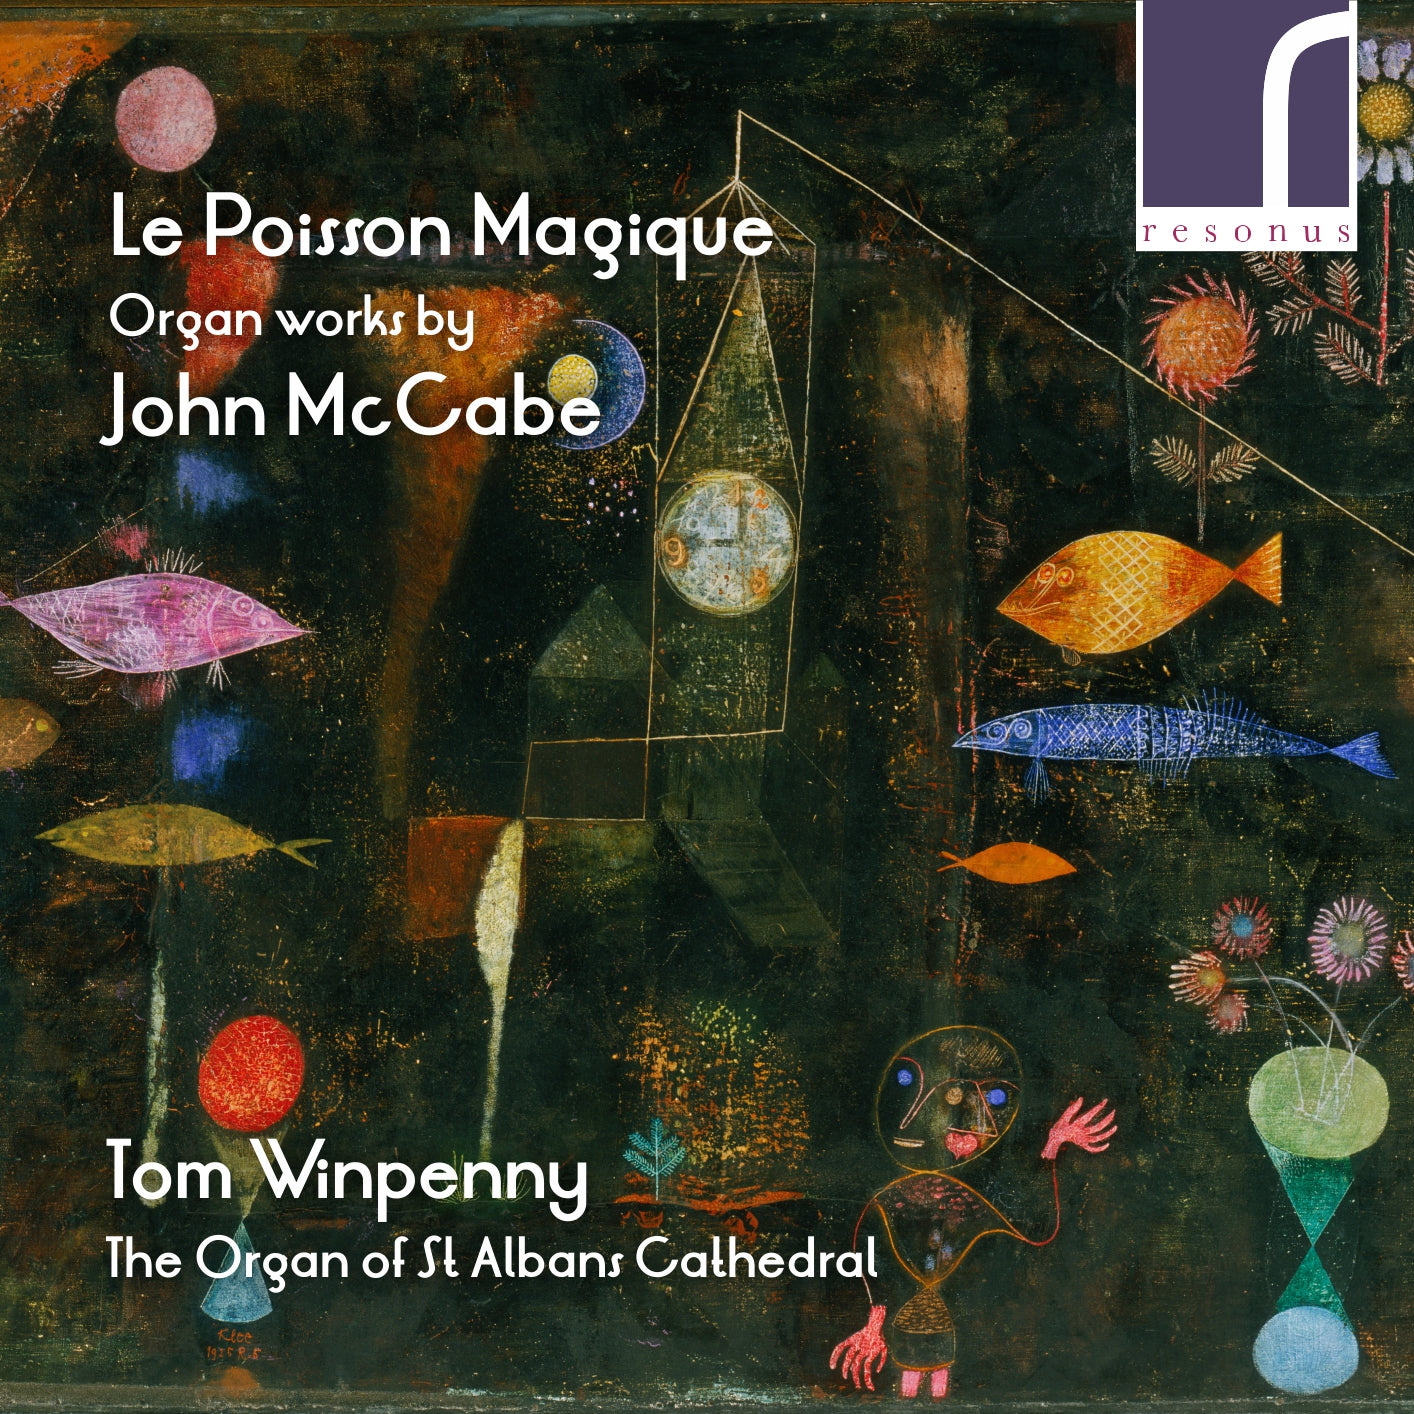 Le Poisson Magique: Organ works by John McCabe